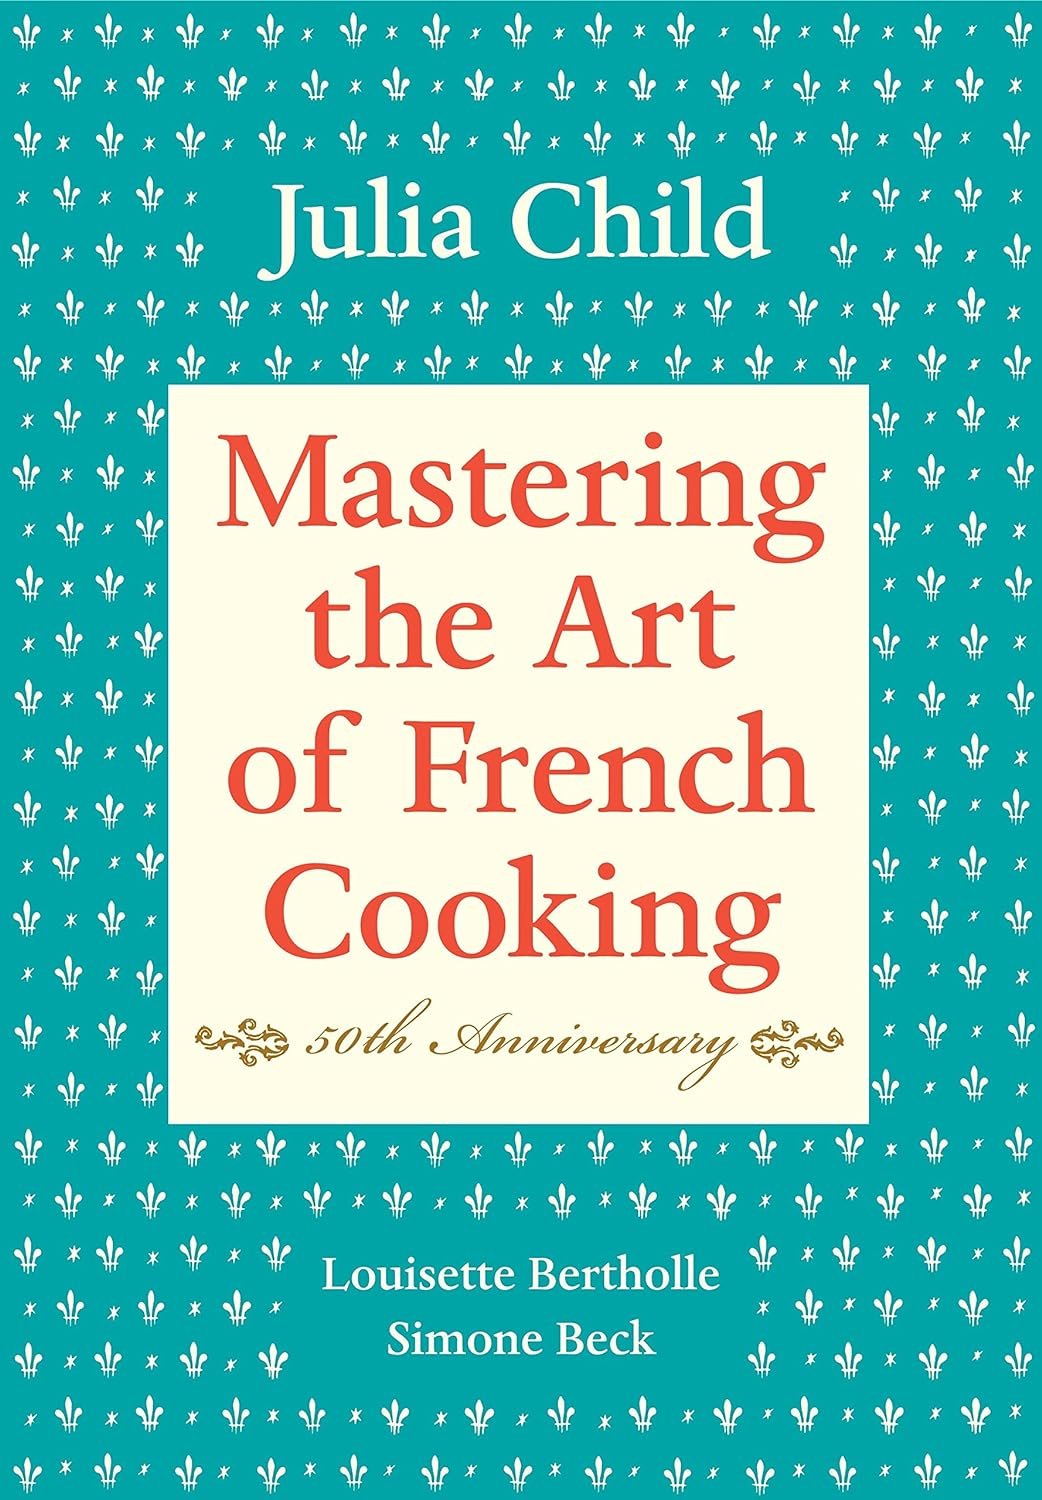 must have Julia Child cookbook